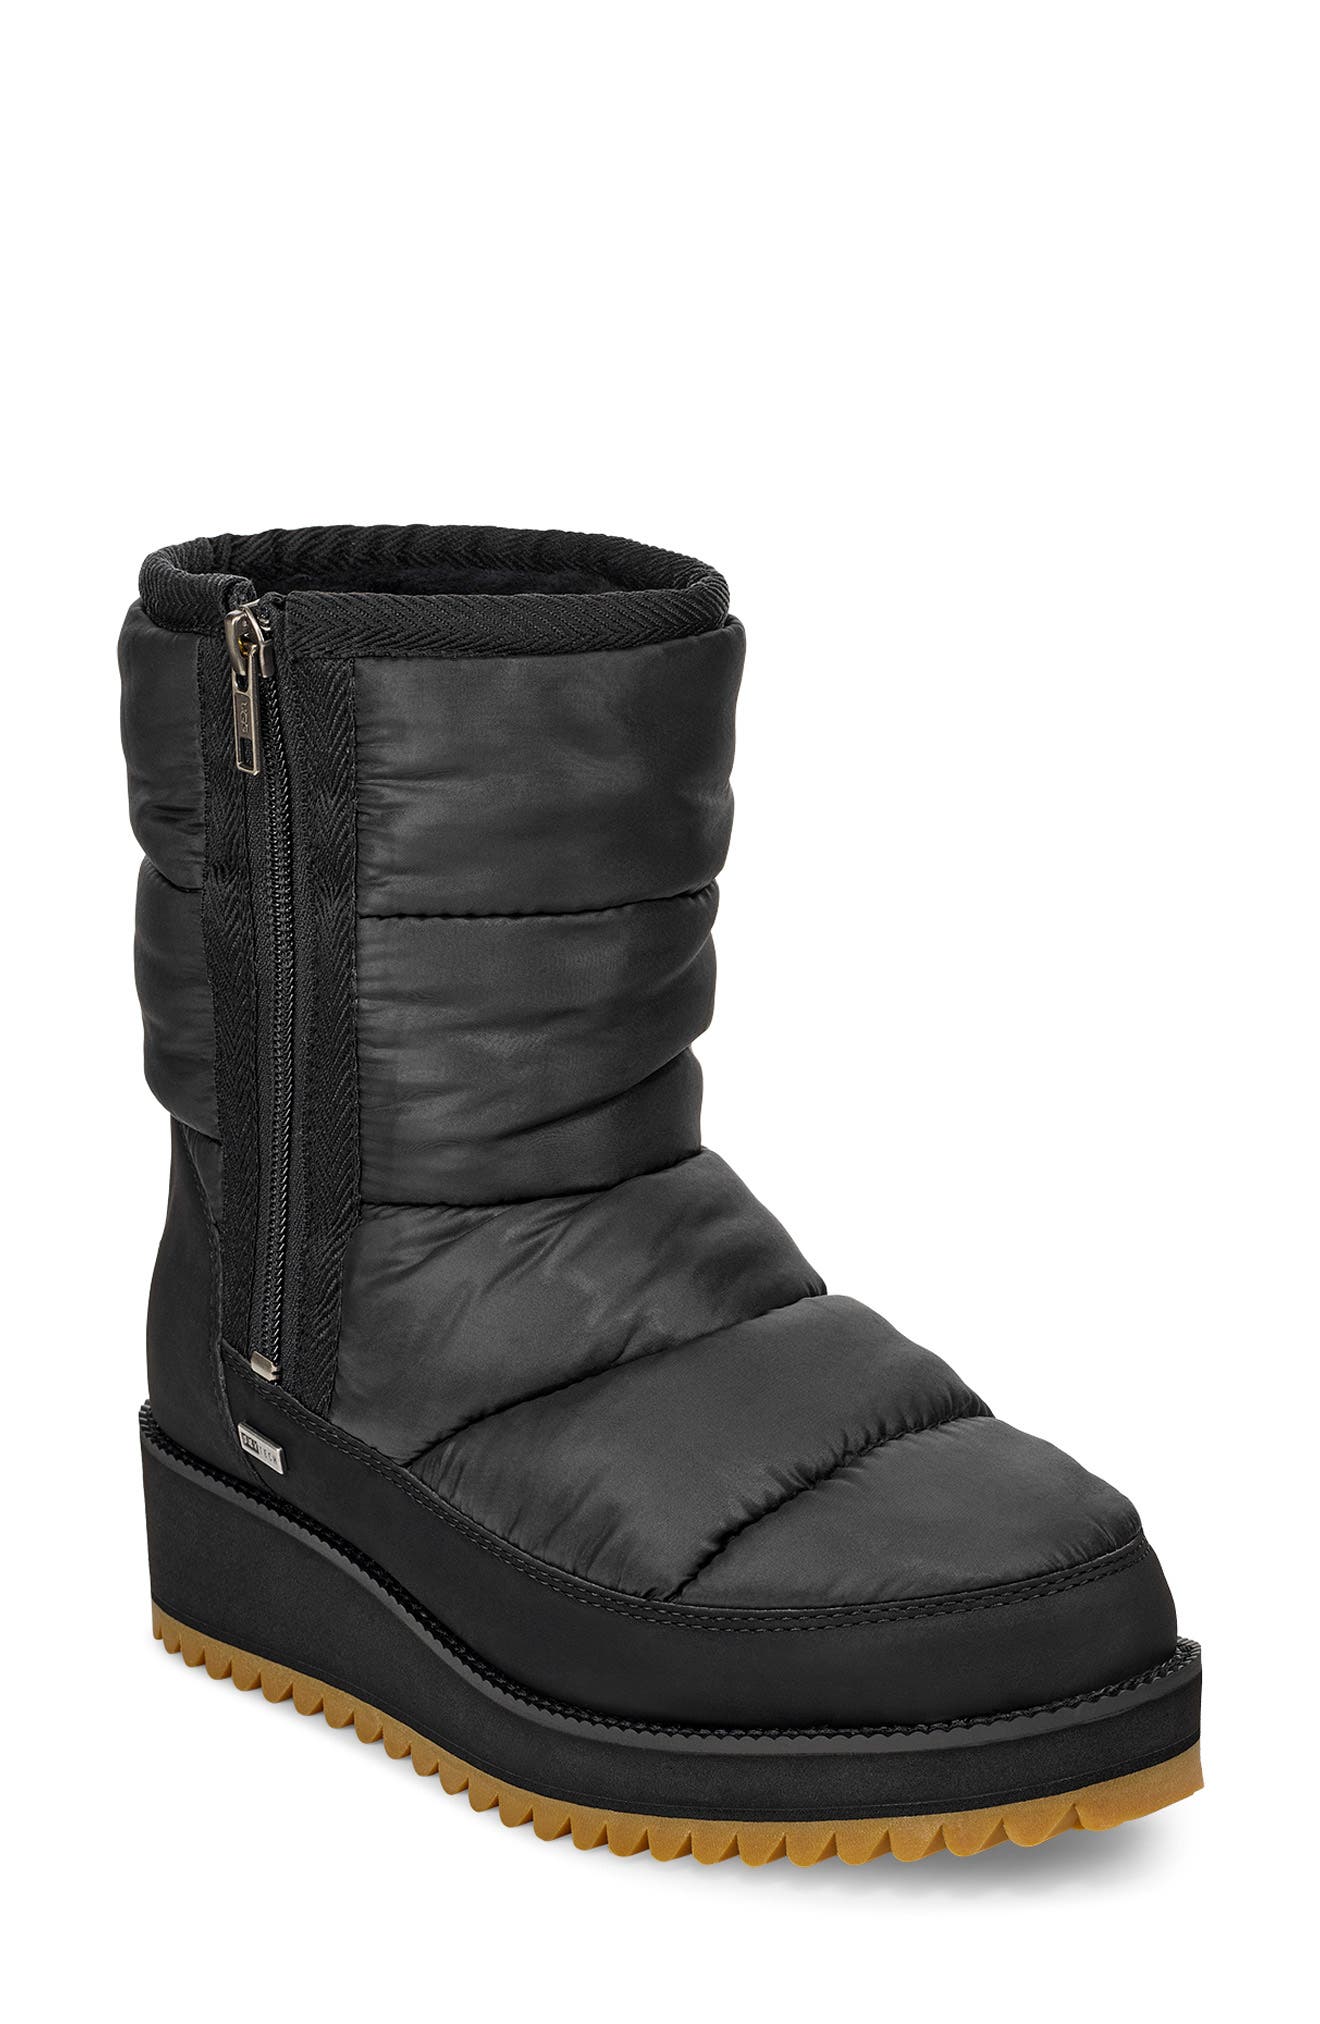 uggs waterproof boots on sale